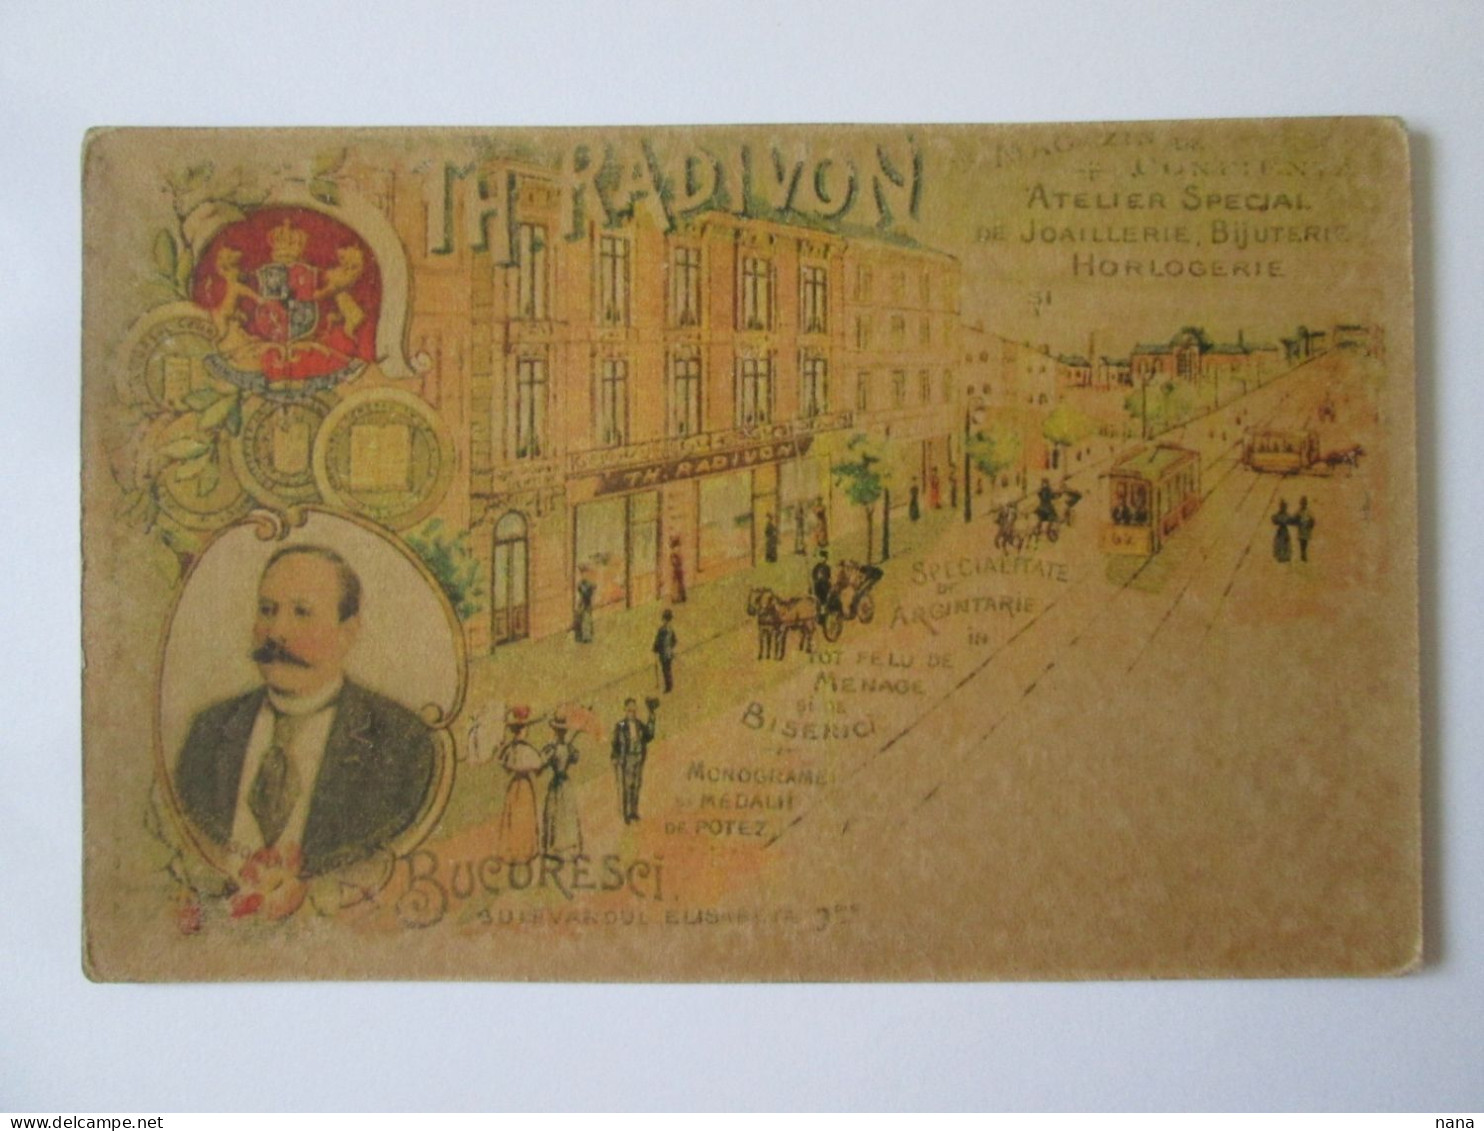 Copie De Carte Postale Roumanie:Th.Radivon Store/Copy Of Romanian Postcard:Th.Radivon Store - Rumänien